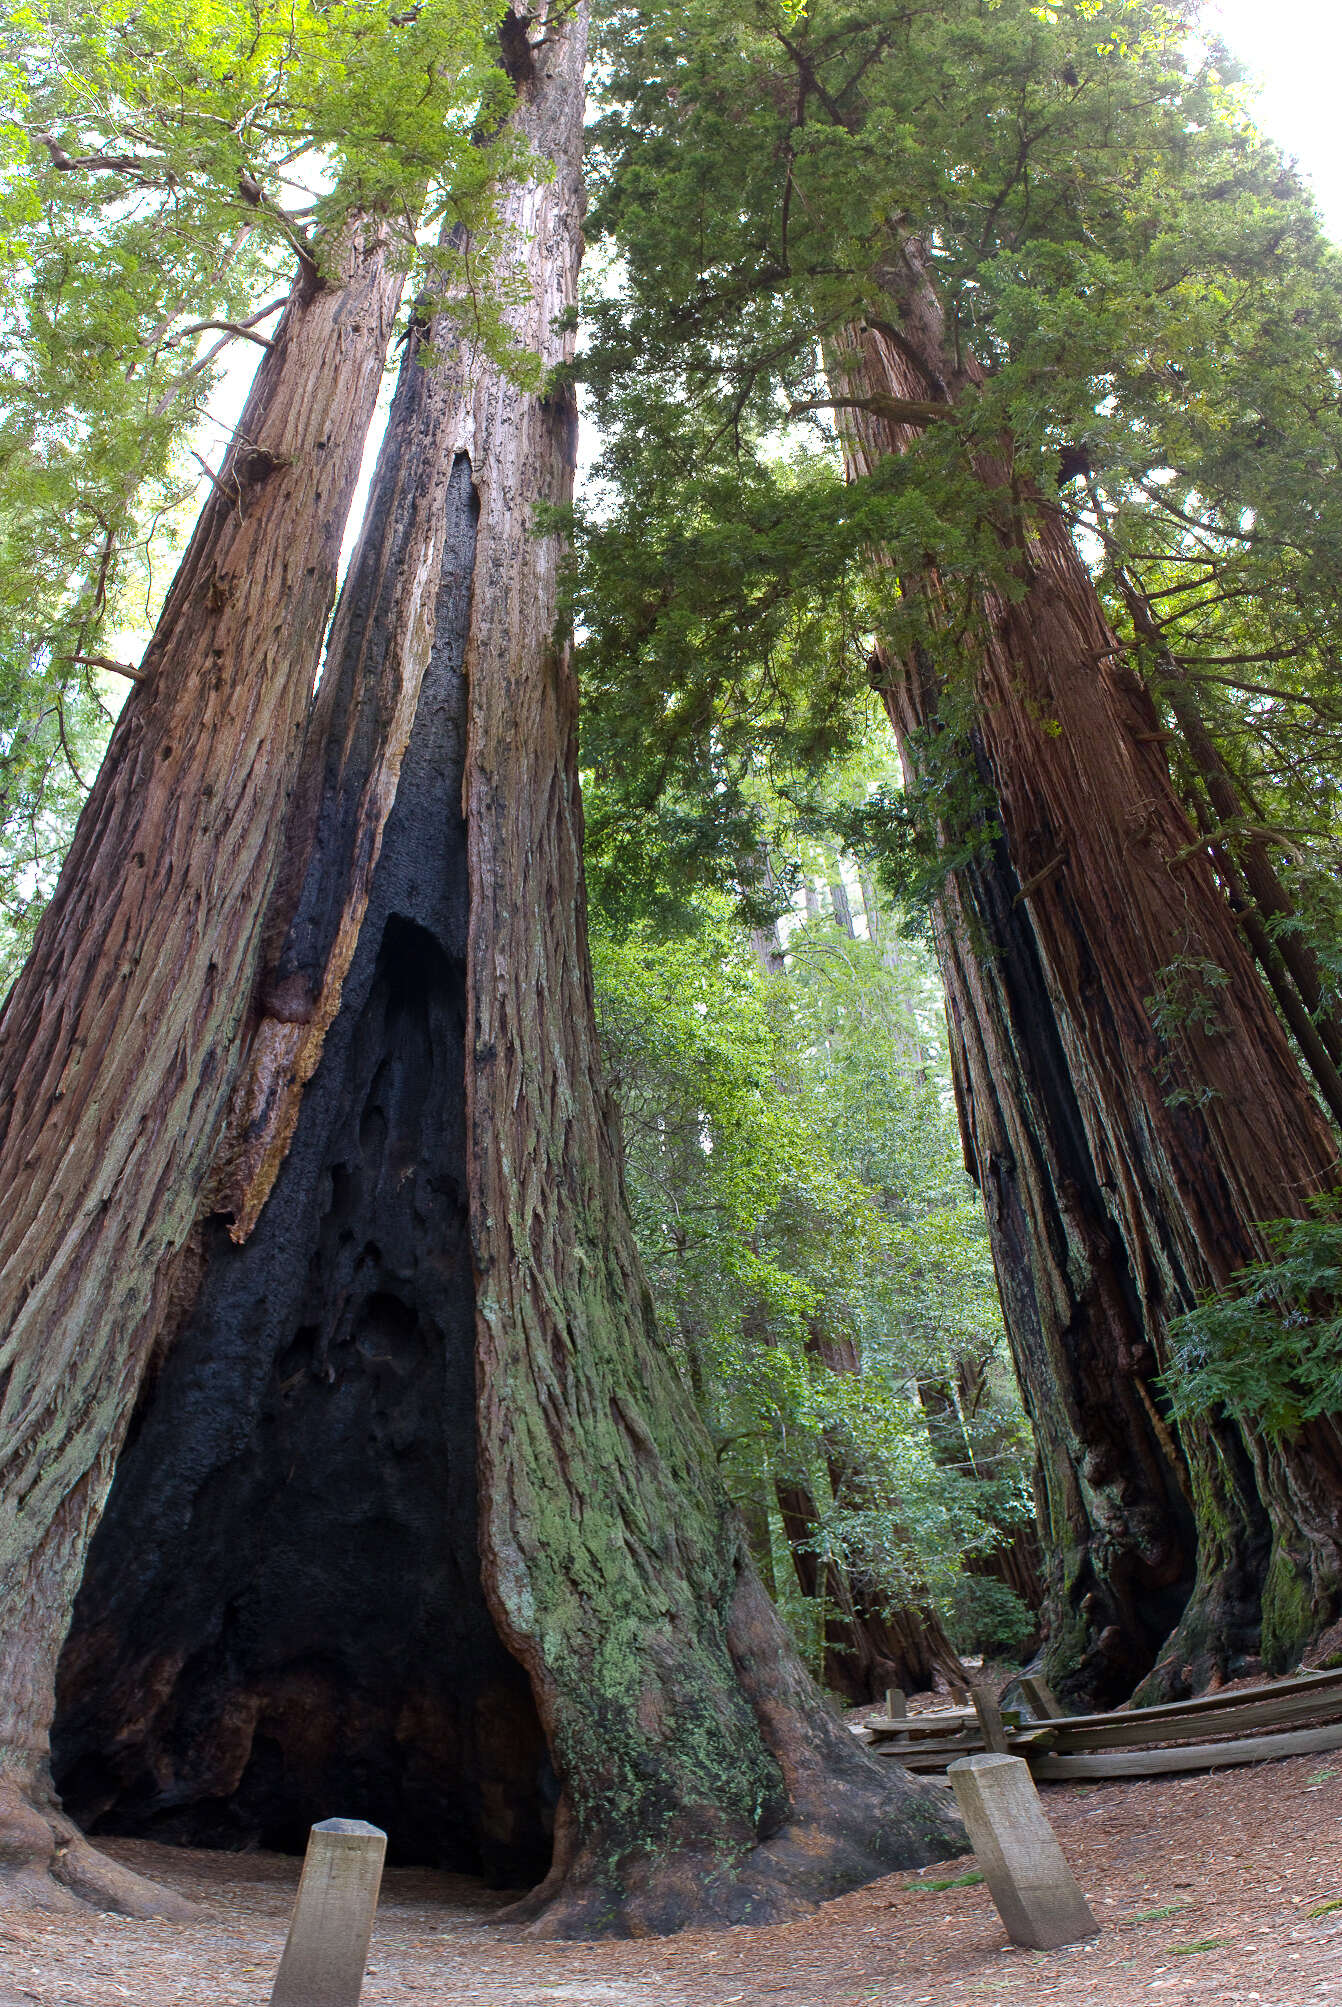 Image de Sequoia